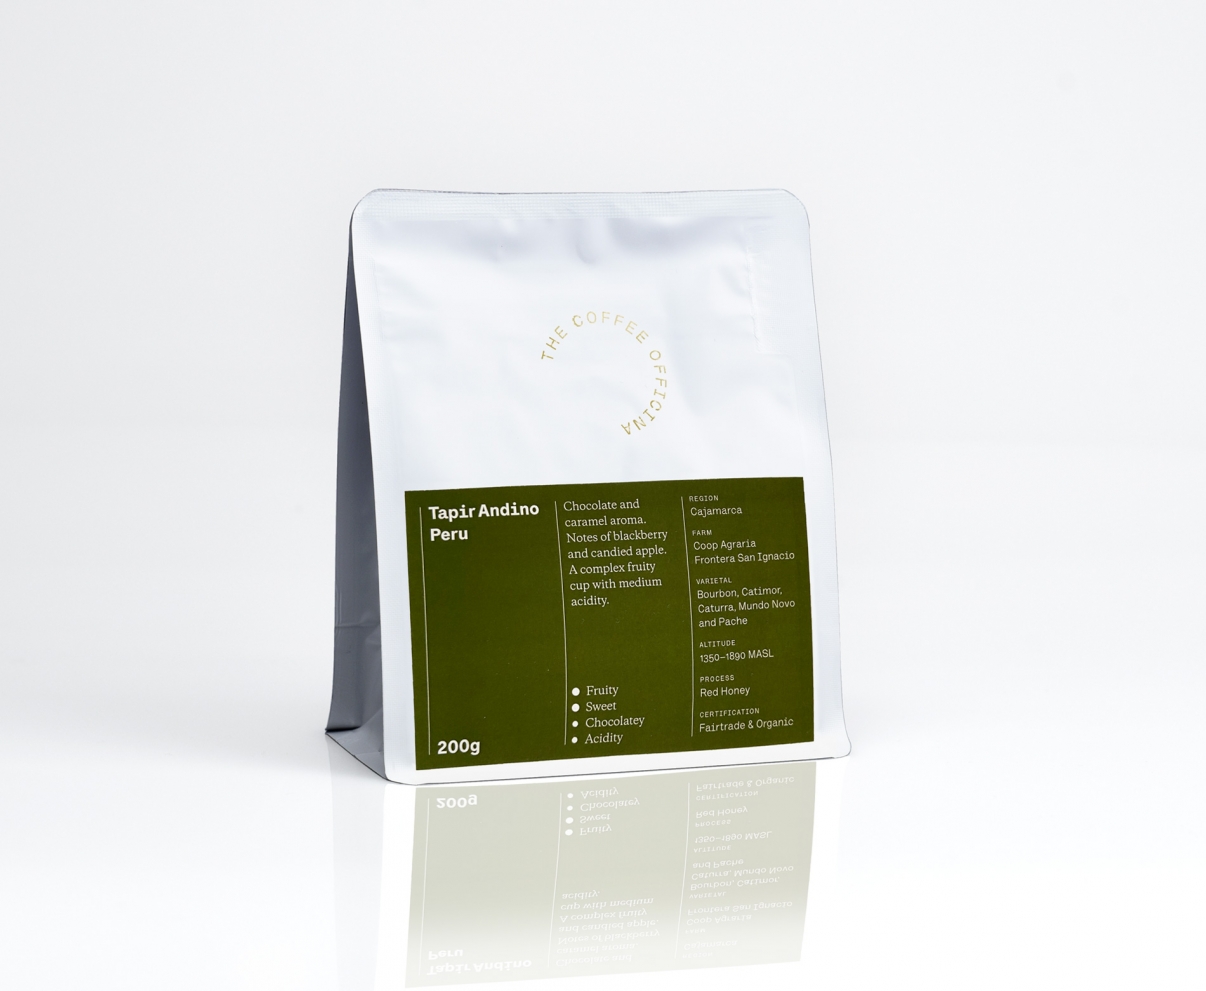 The Coffee Officina Tapir Andino Peru Single Origin